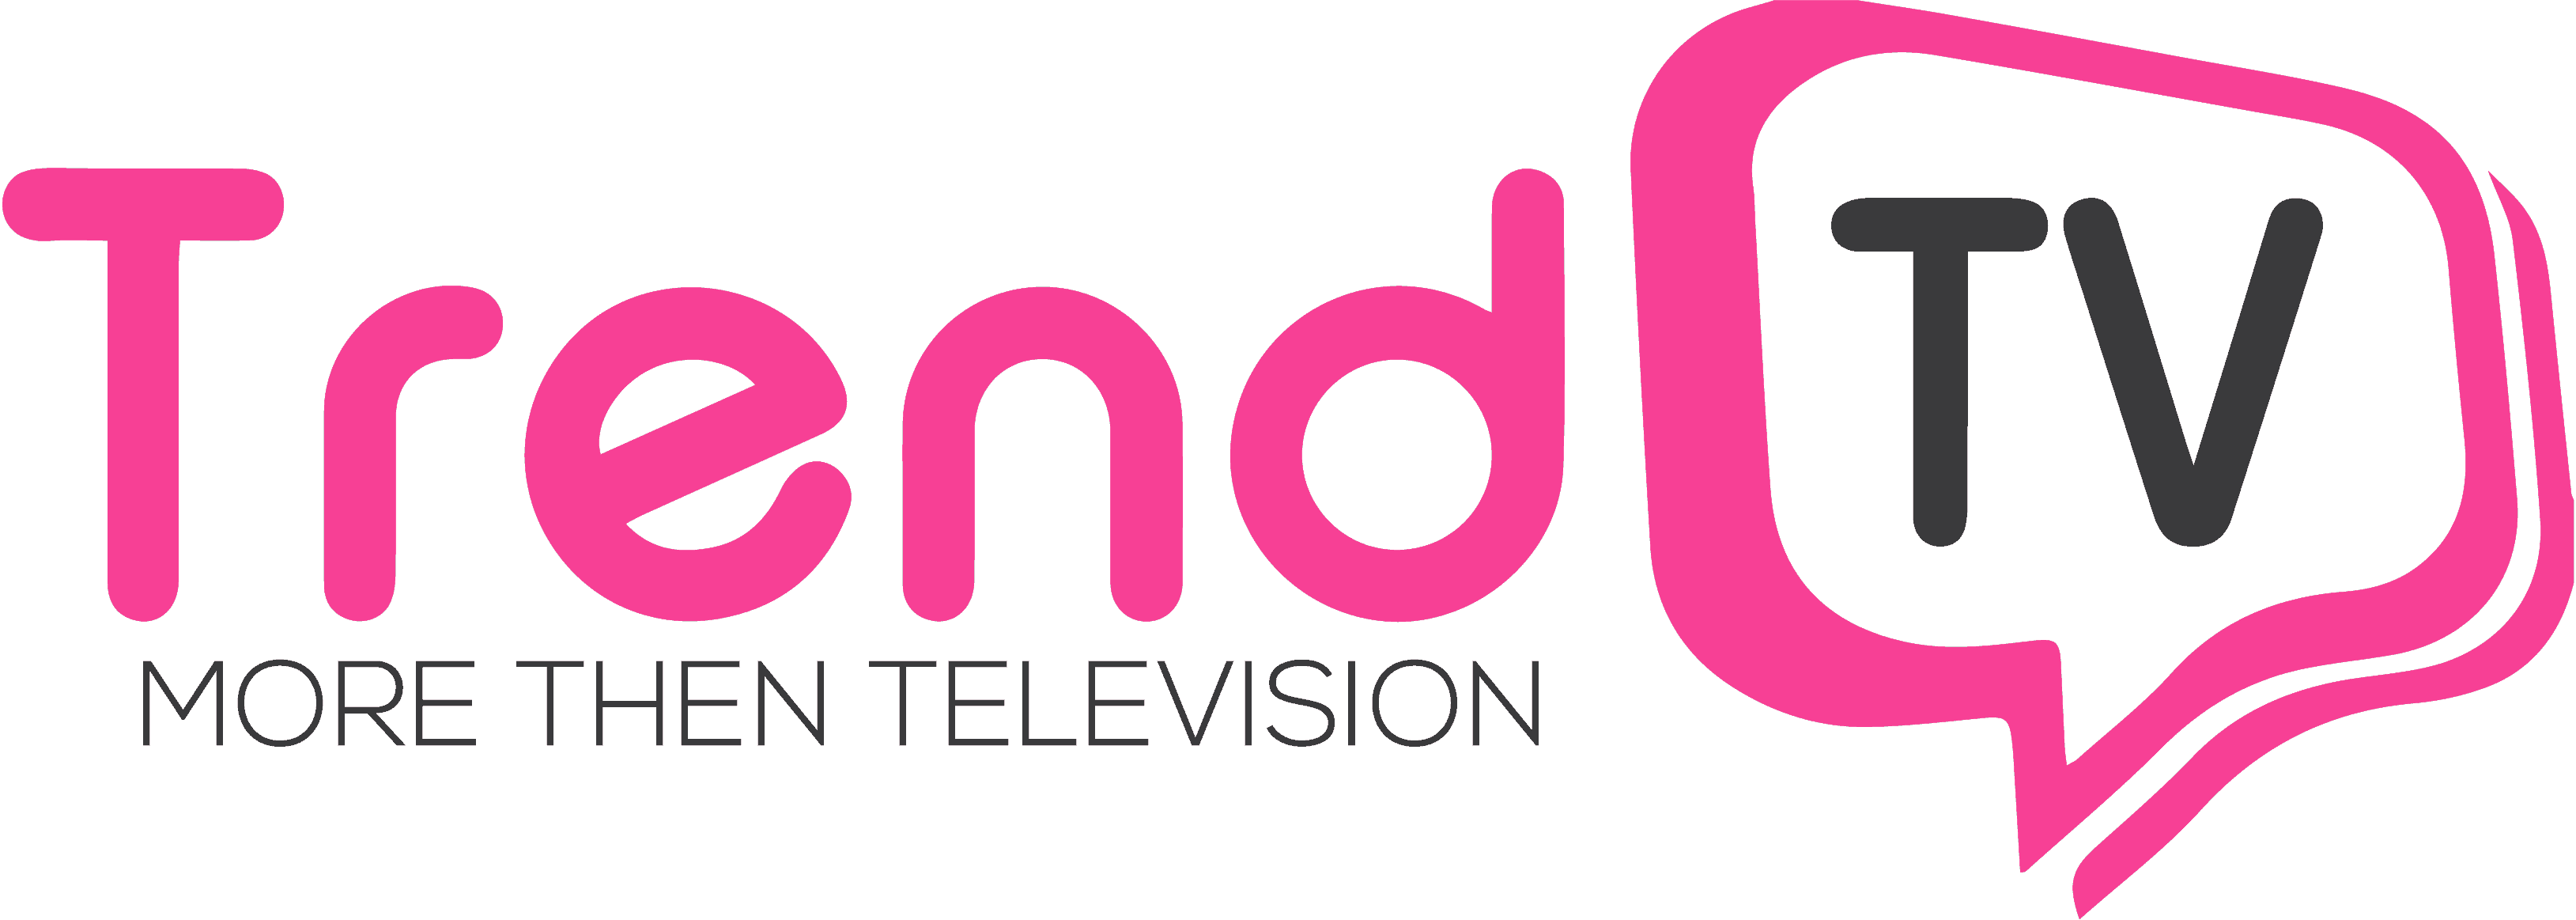 Trend tv logo